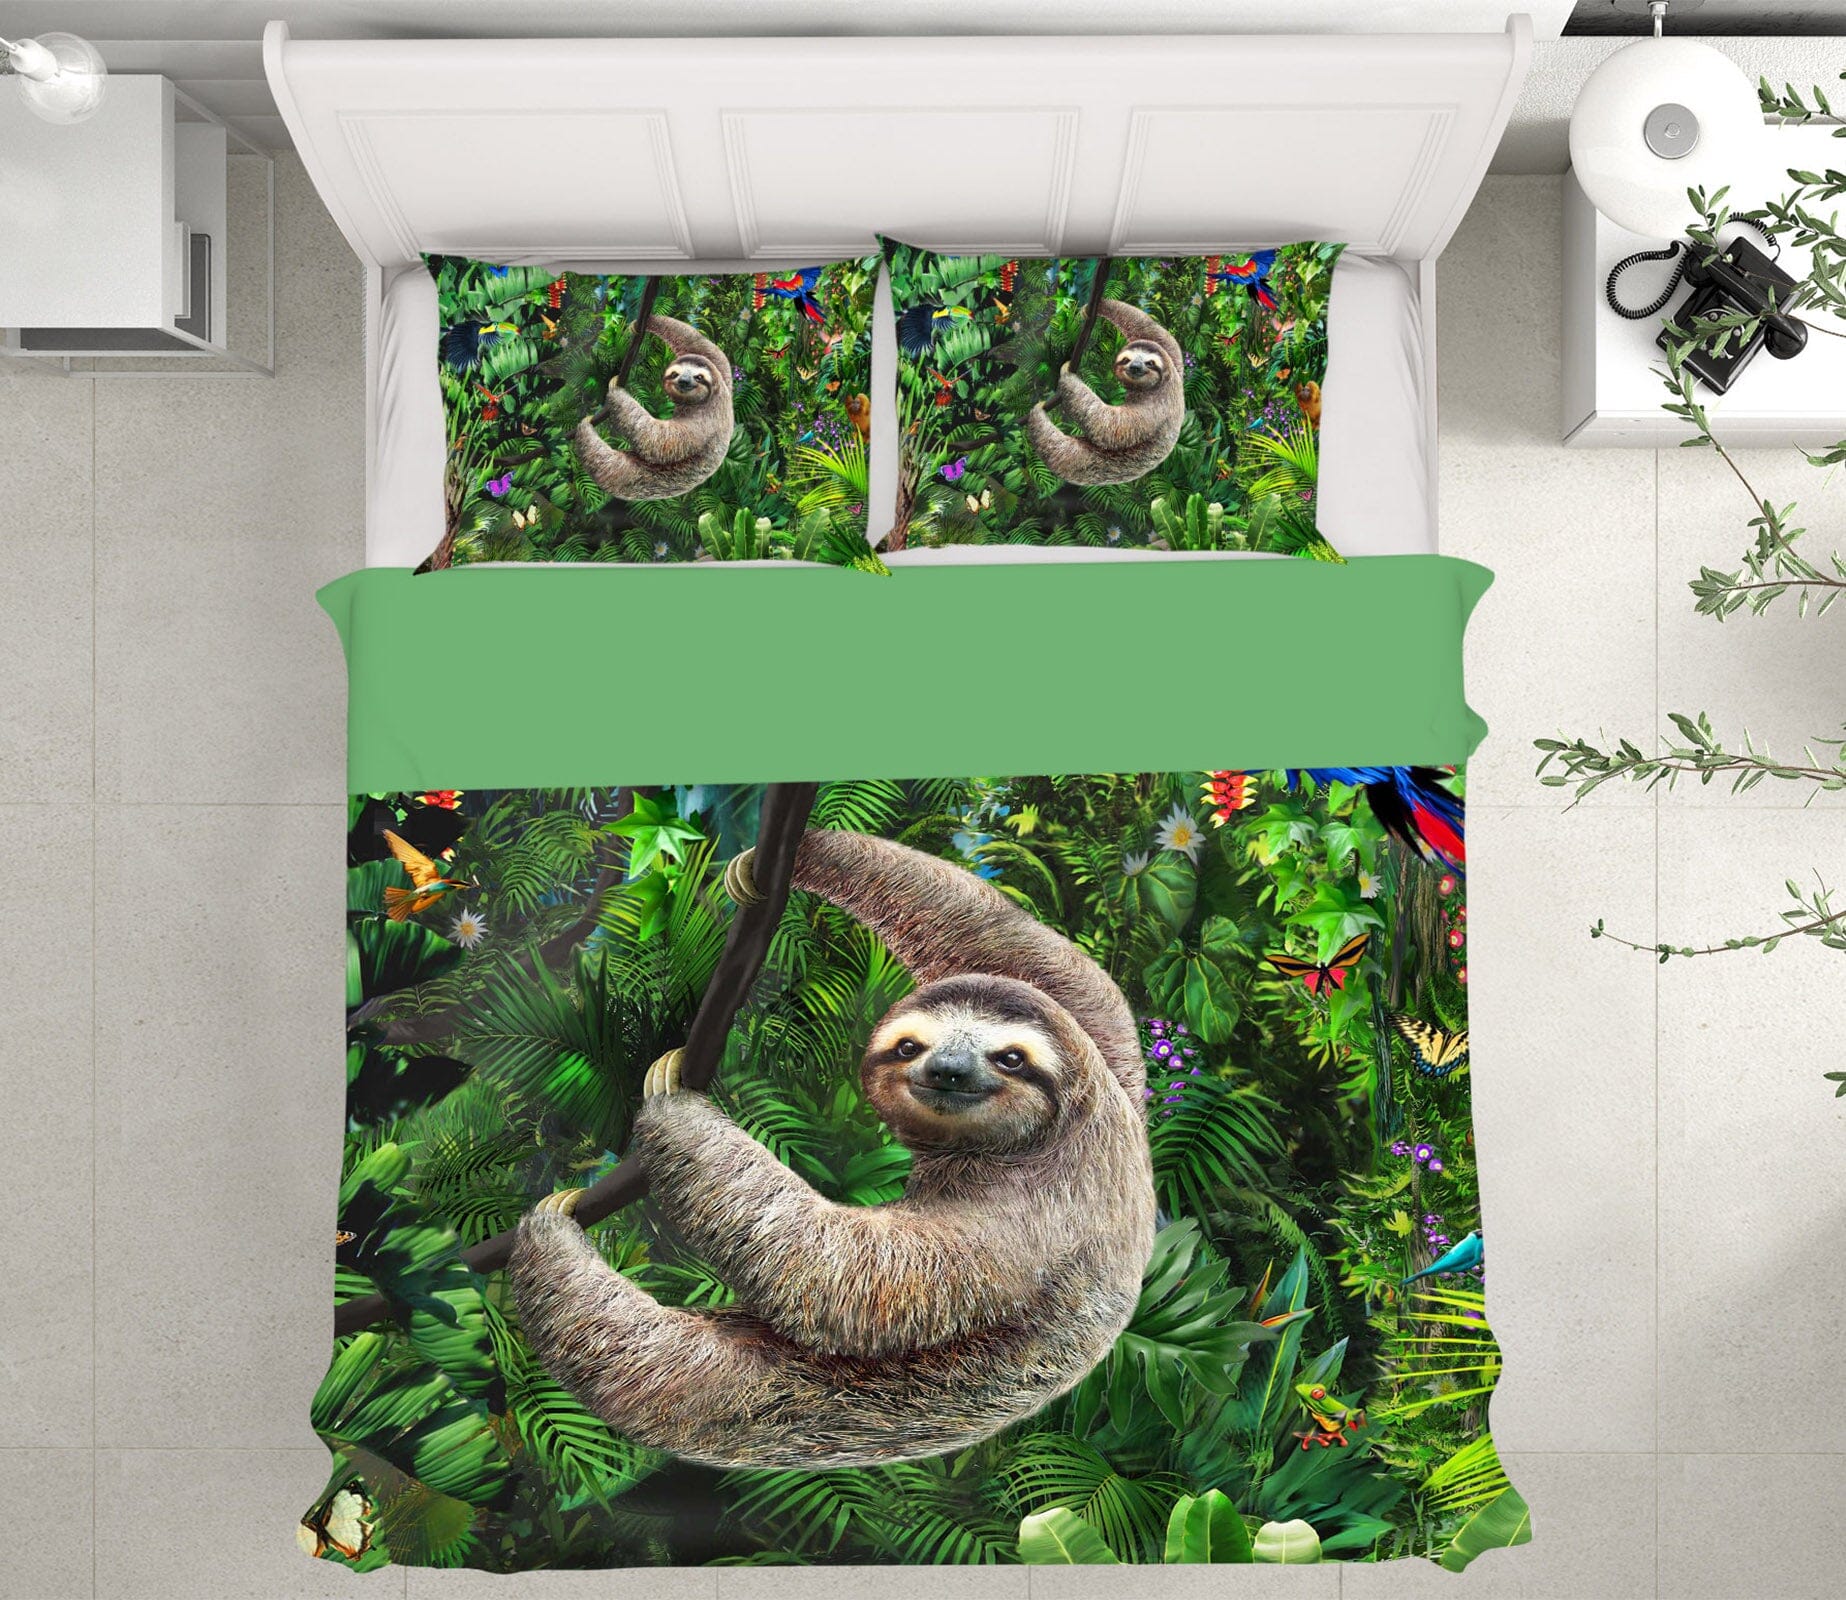 3D Cute Koala 2133 Adrian Chesterman Bedding Bed Pillowcases Quilt Quiet Covers AJ Creativity Home 